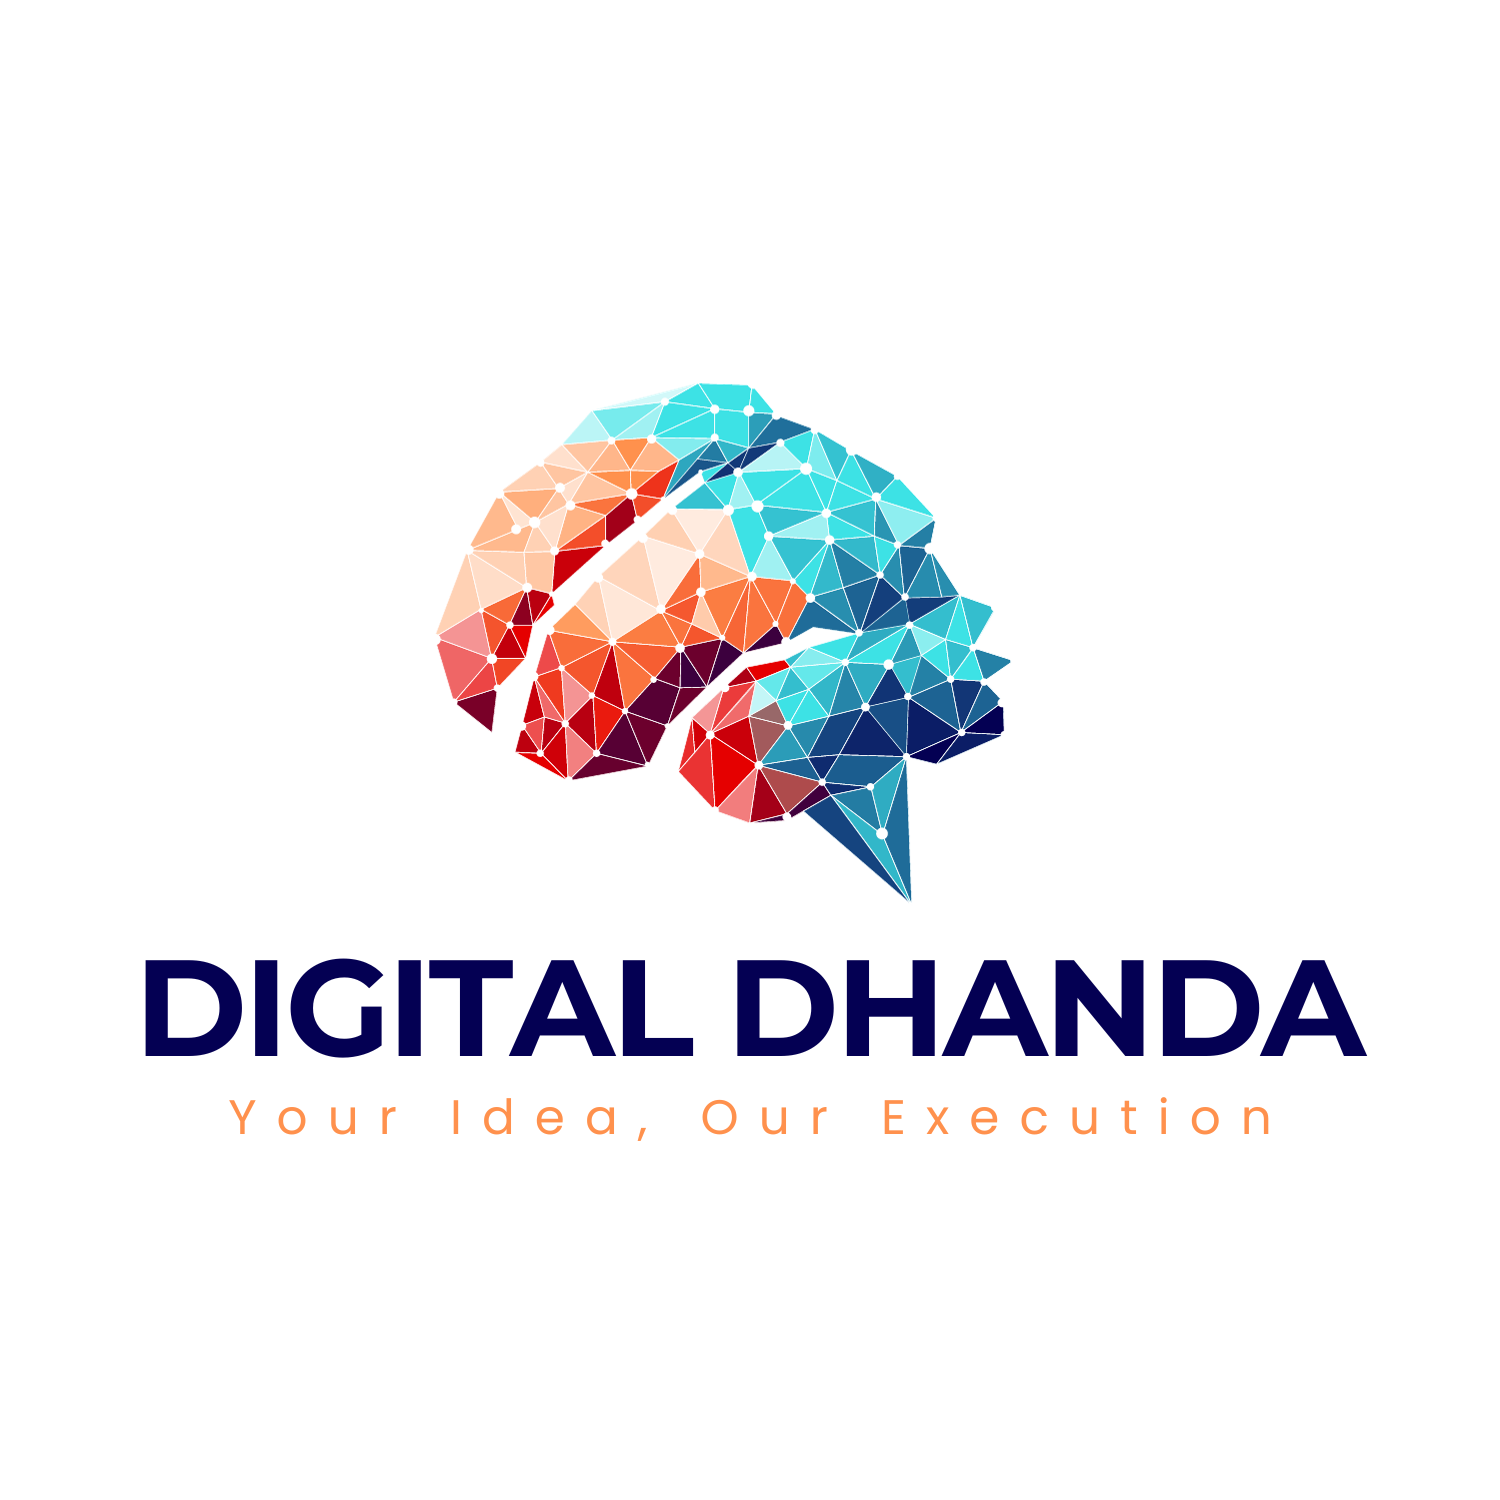 Digital Dhanda logo